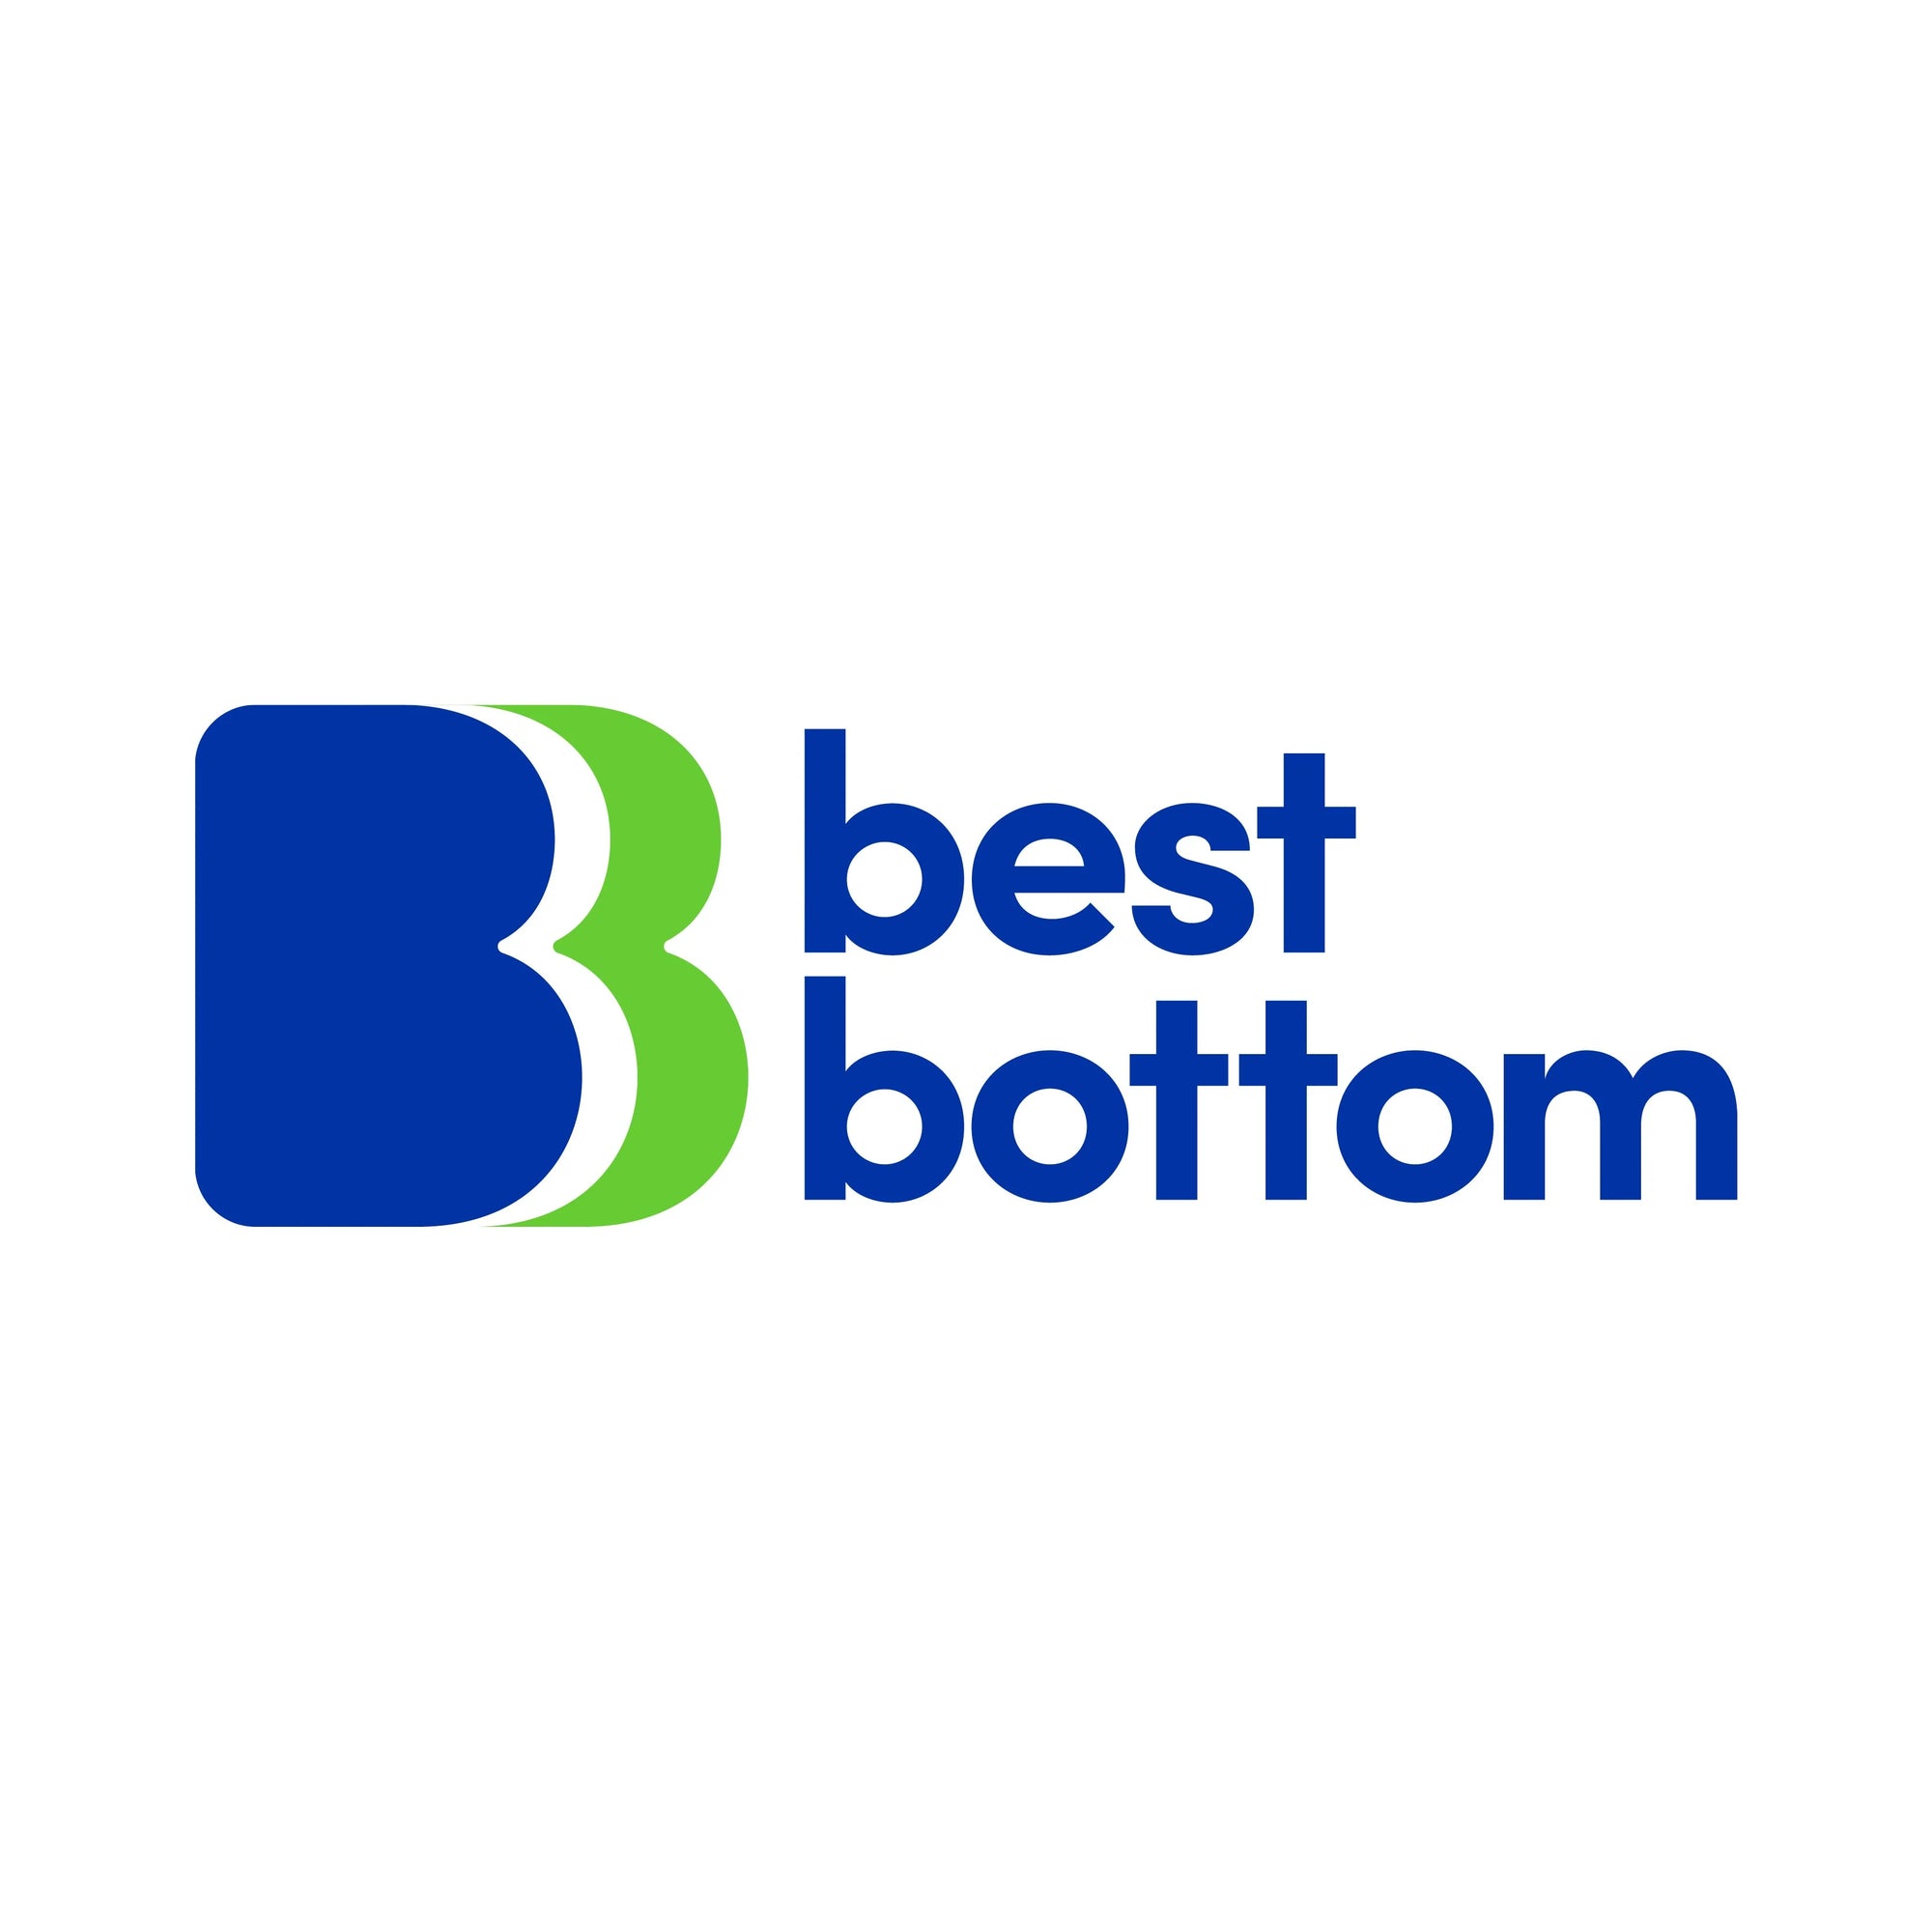 Best Bottom Brand Collection